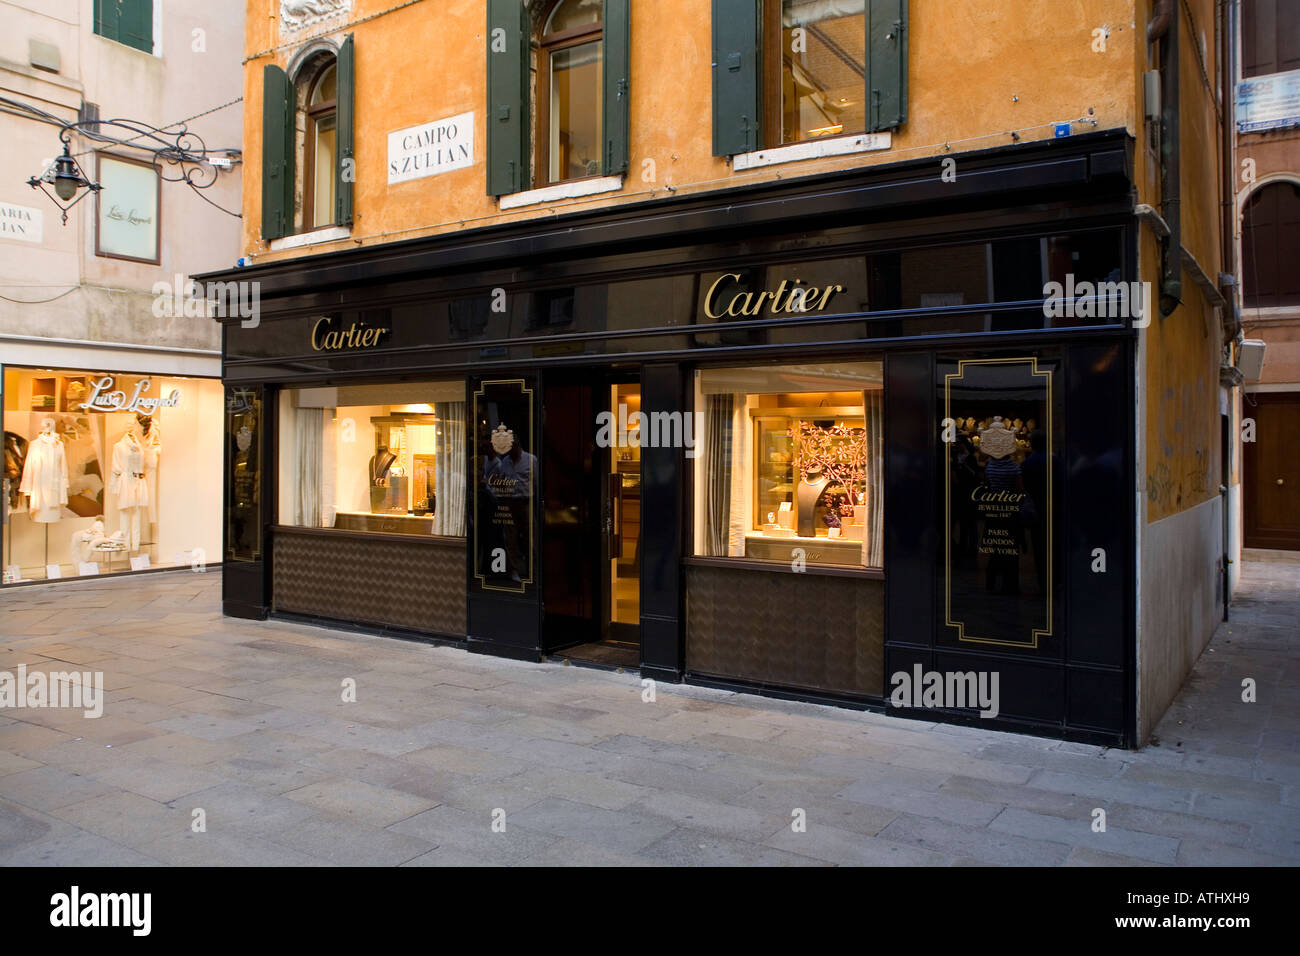 Cartier shop in Venice Italy Stock 